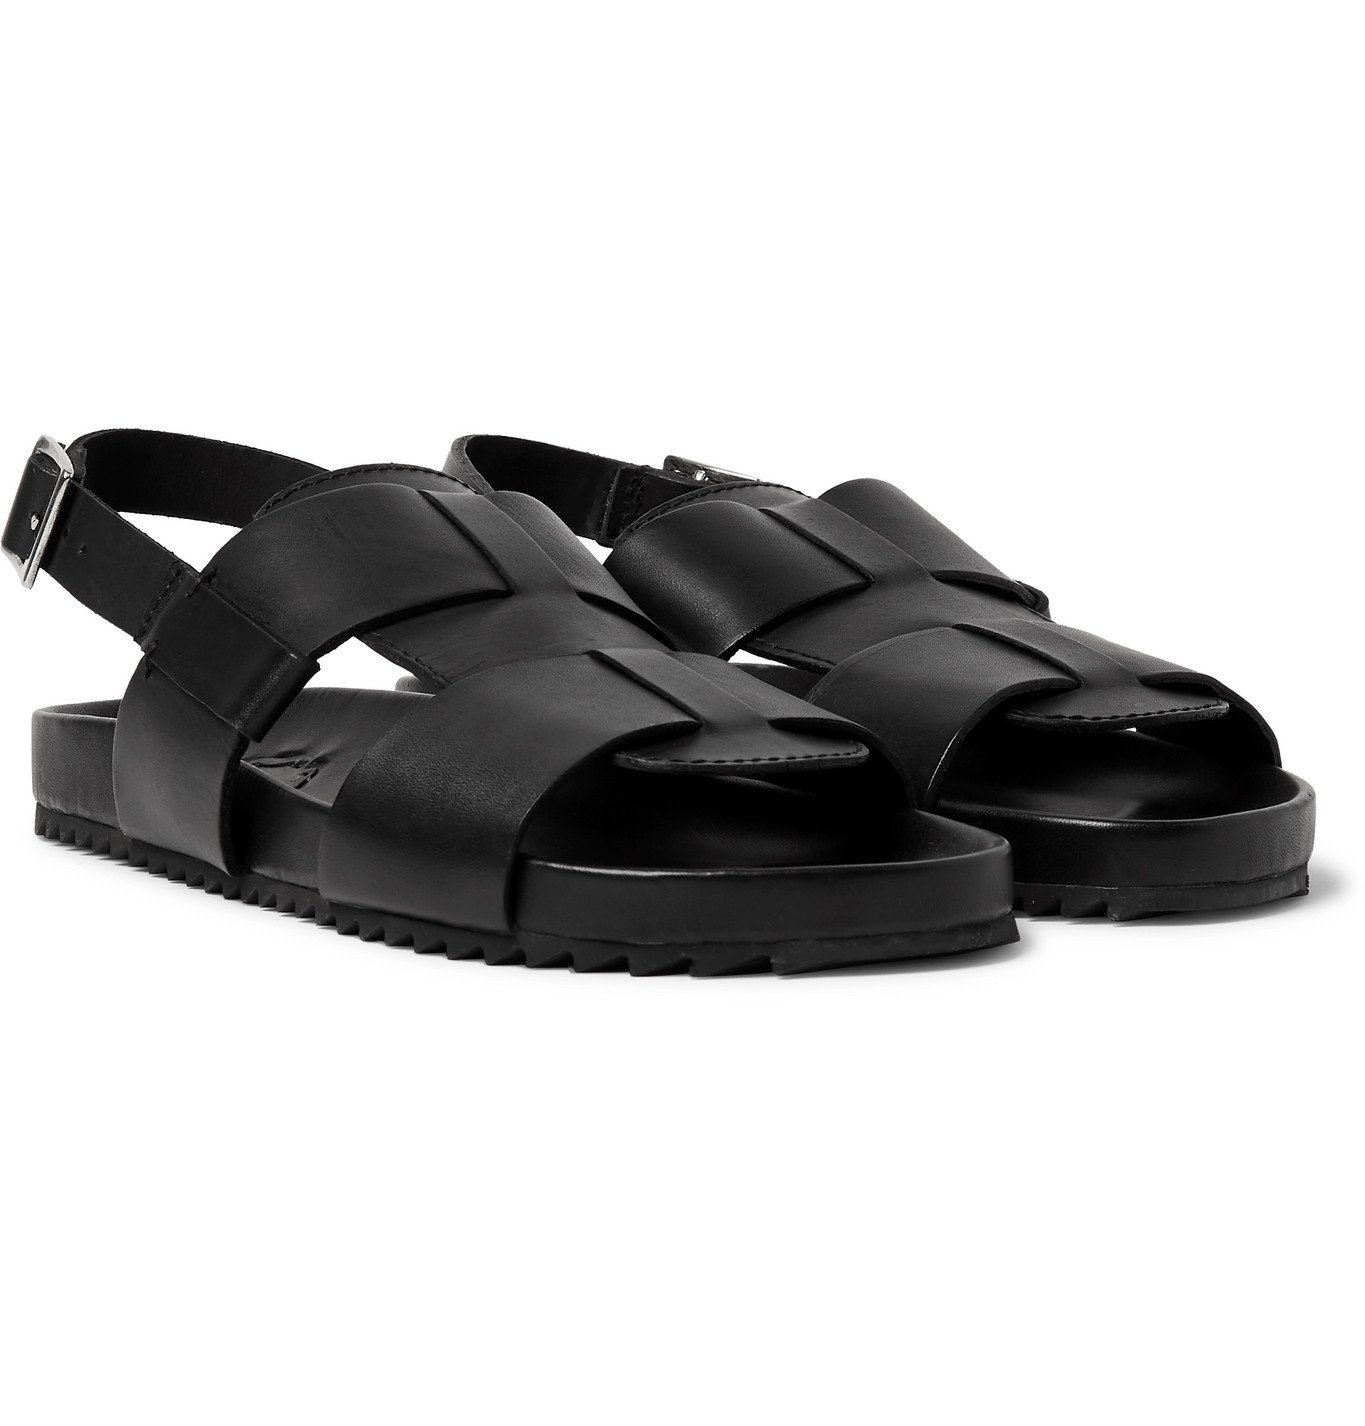 Grenson - Wiley Leather Sandals - Beige Grenson